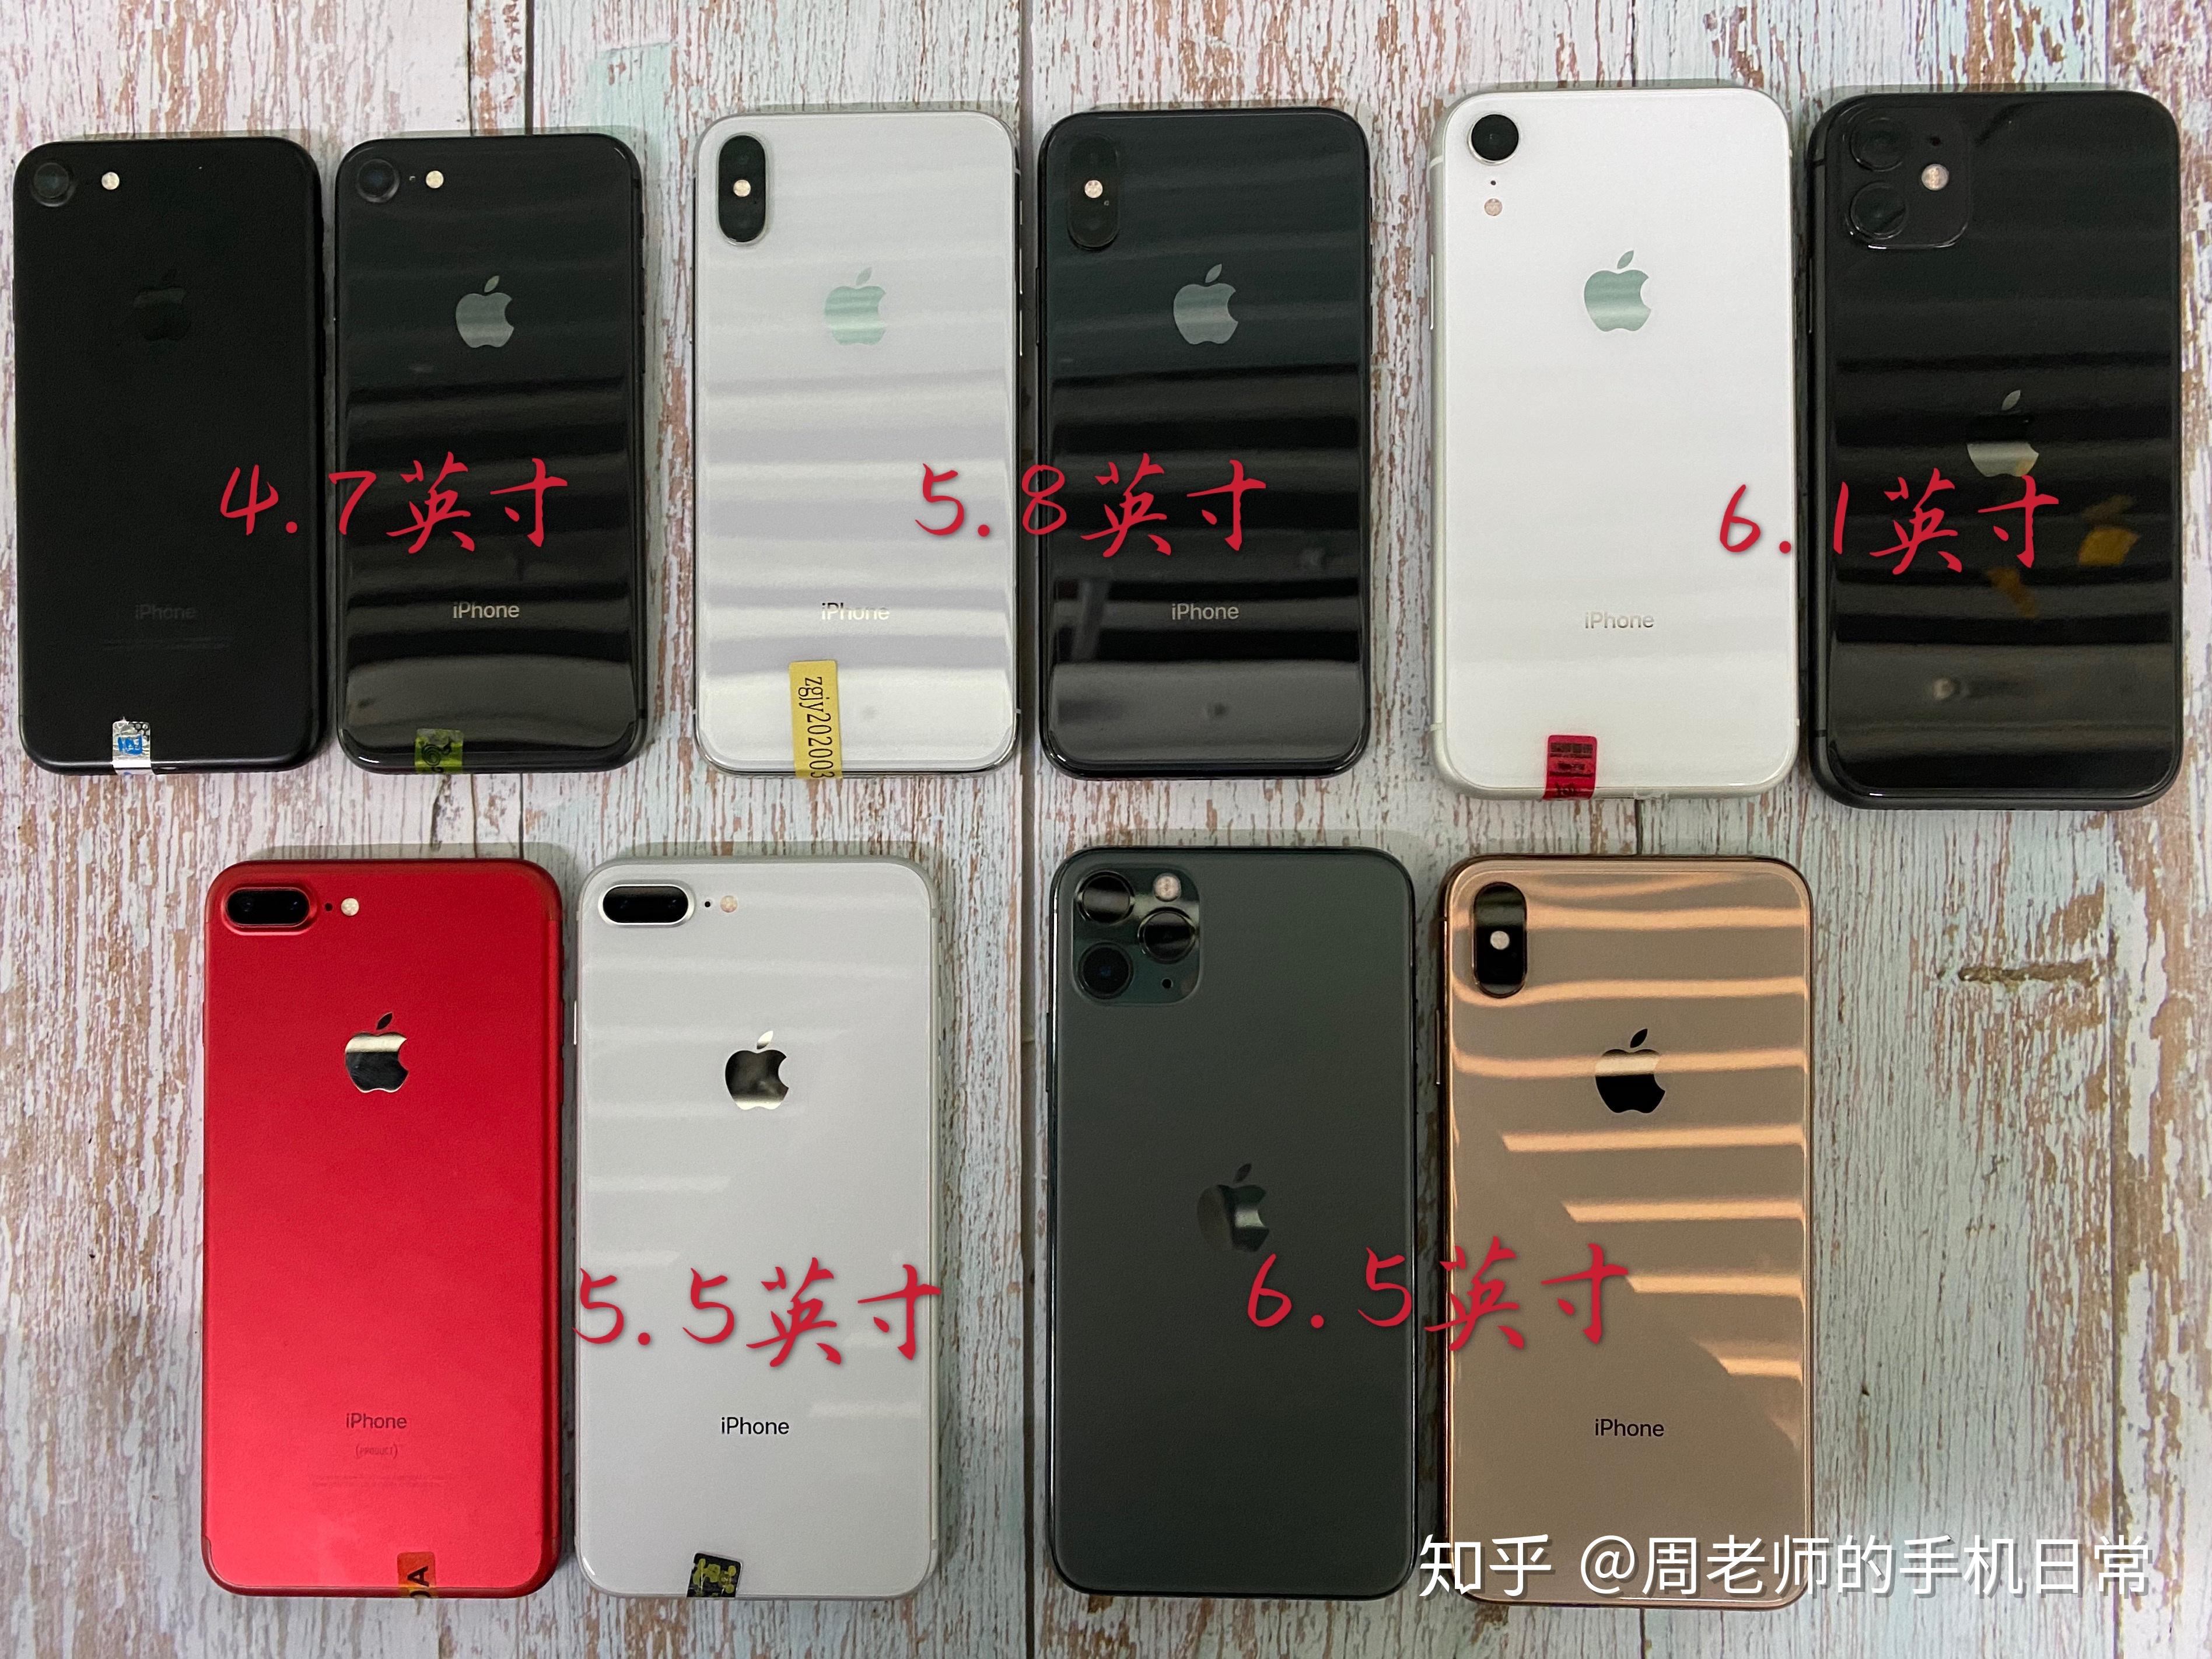 iPhone 8 / 8 plus AOS 香港預購連結 URL Apple Store direct link - 香港 unwire.hk